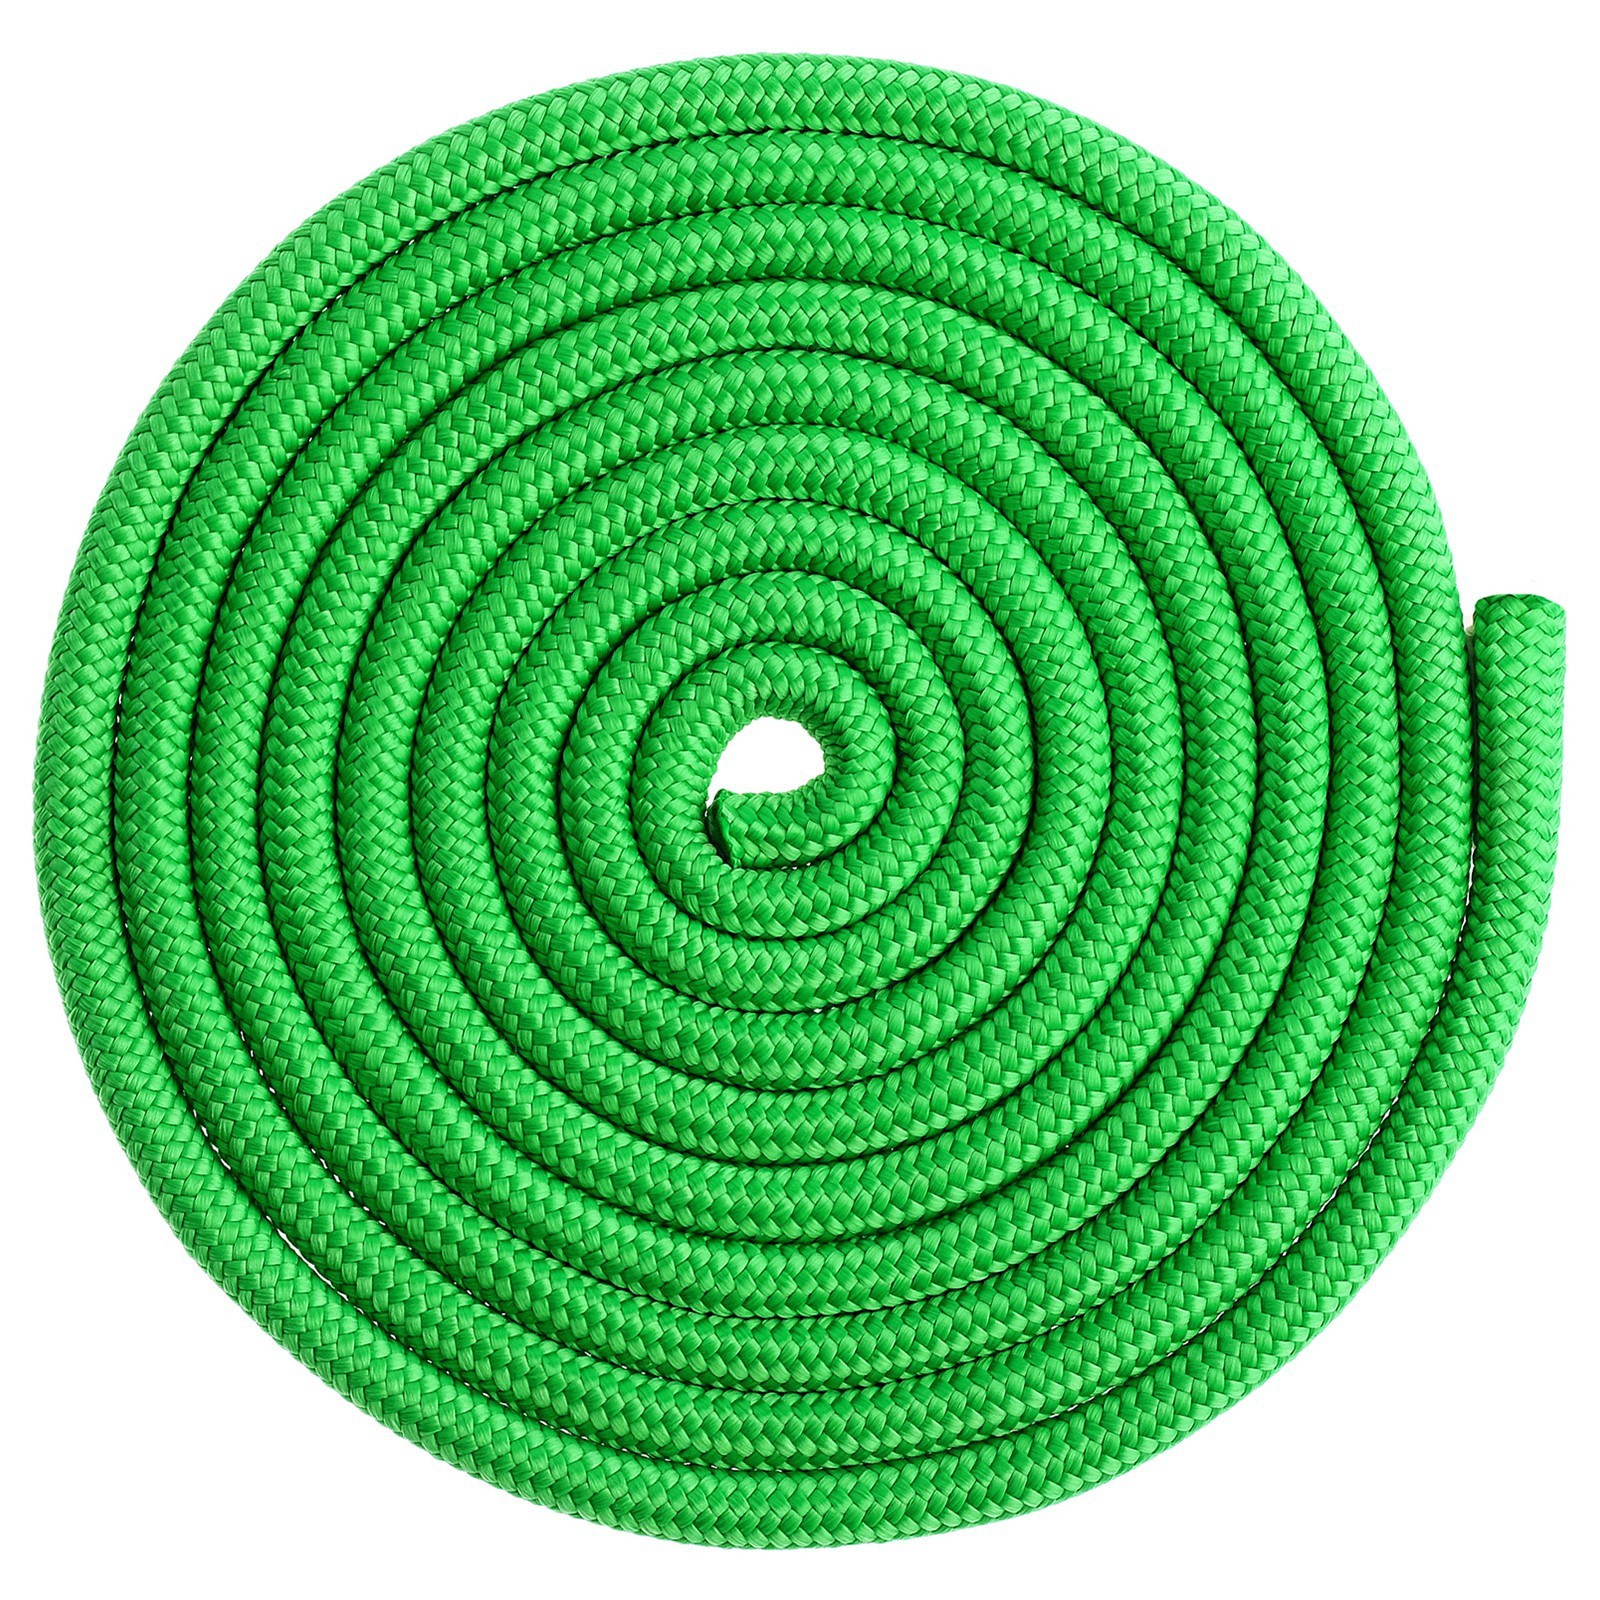 Скакалка гимнастическая утяжелённая Grace Dance, 2,5 м, 150 г, цвет зелёный 4446793